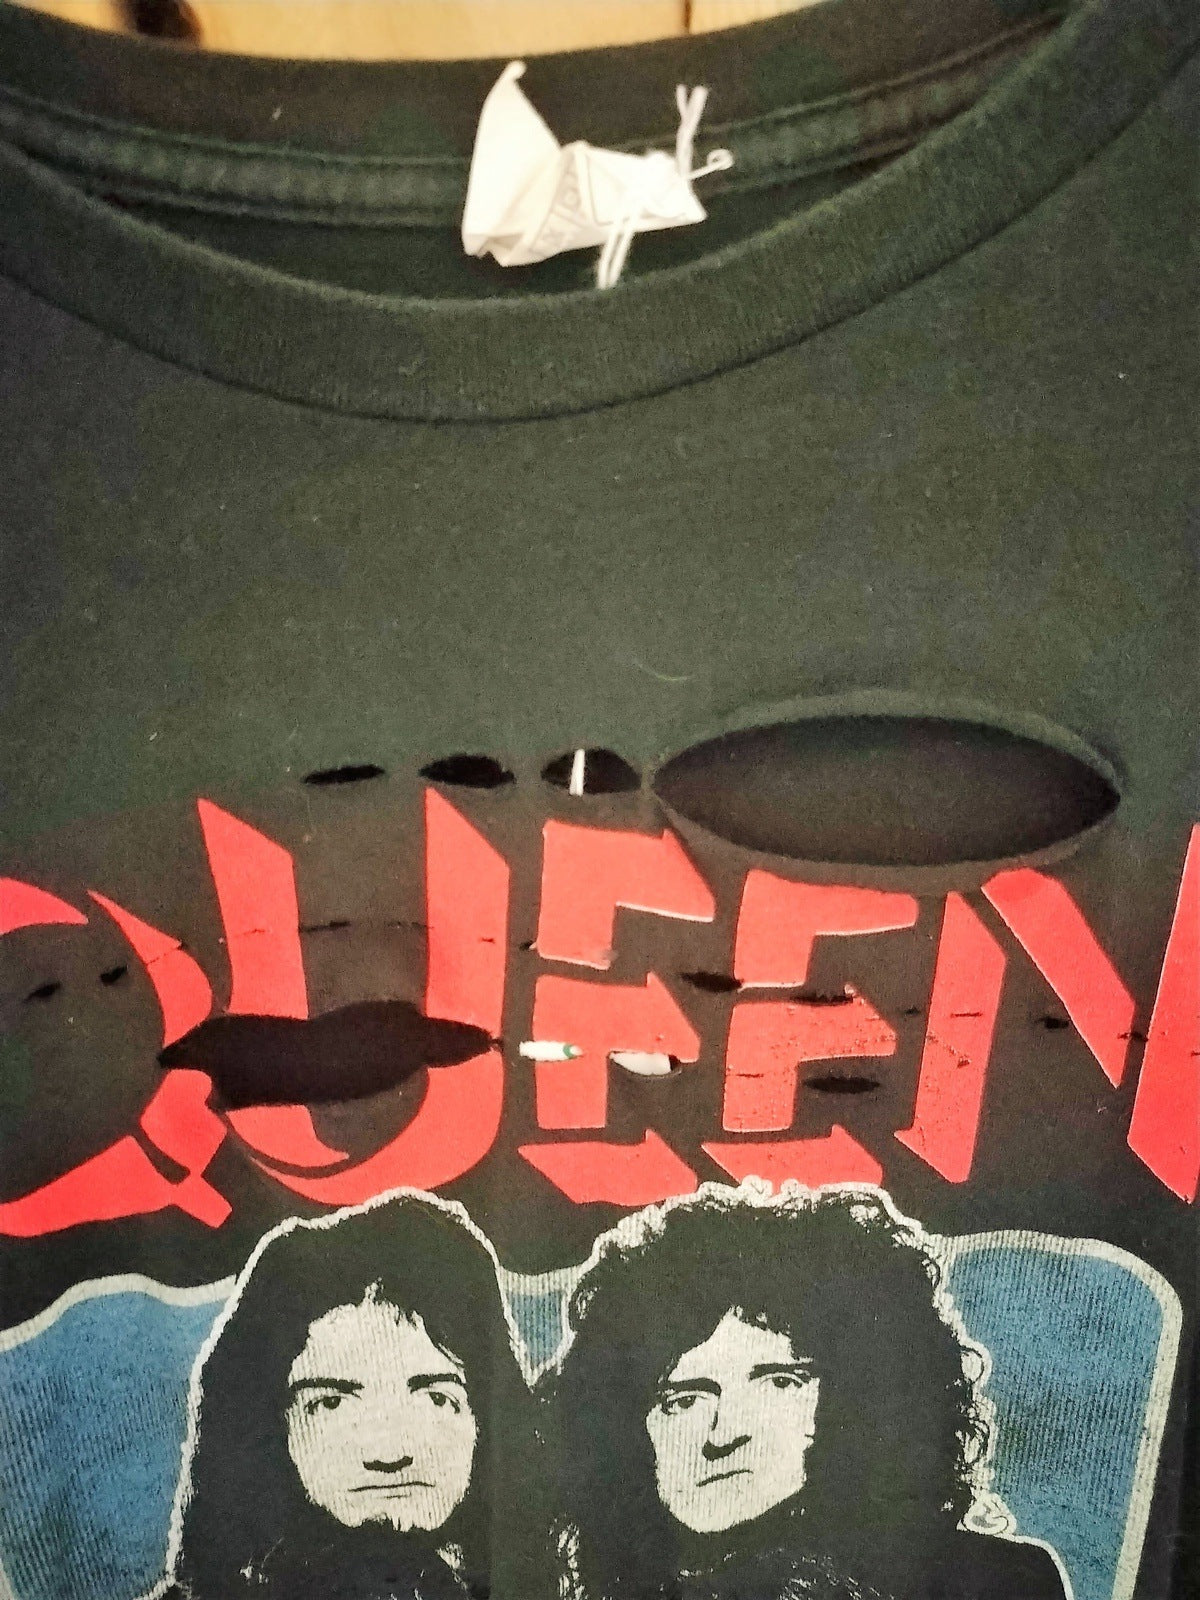 Queen Bohemian Rhapsody T Shirt Size Medium